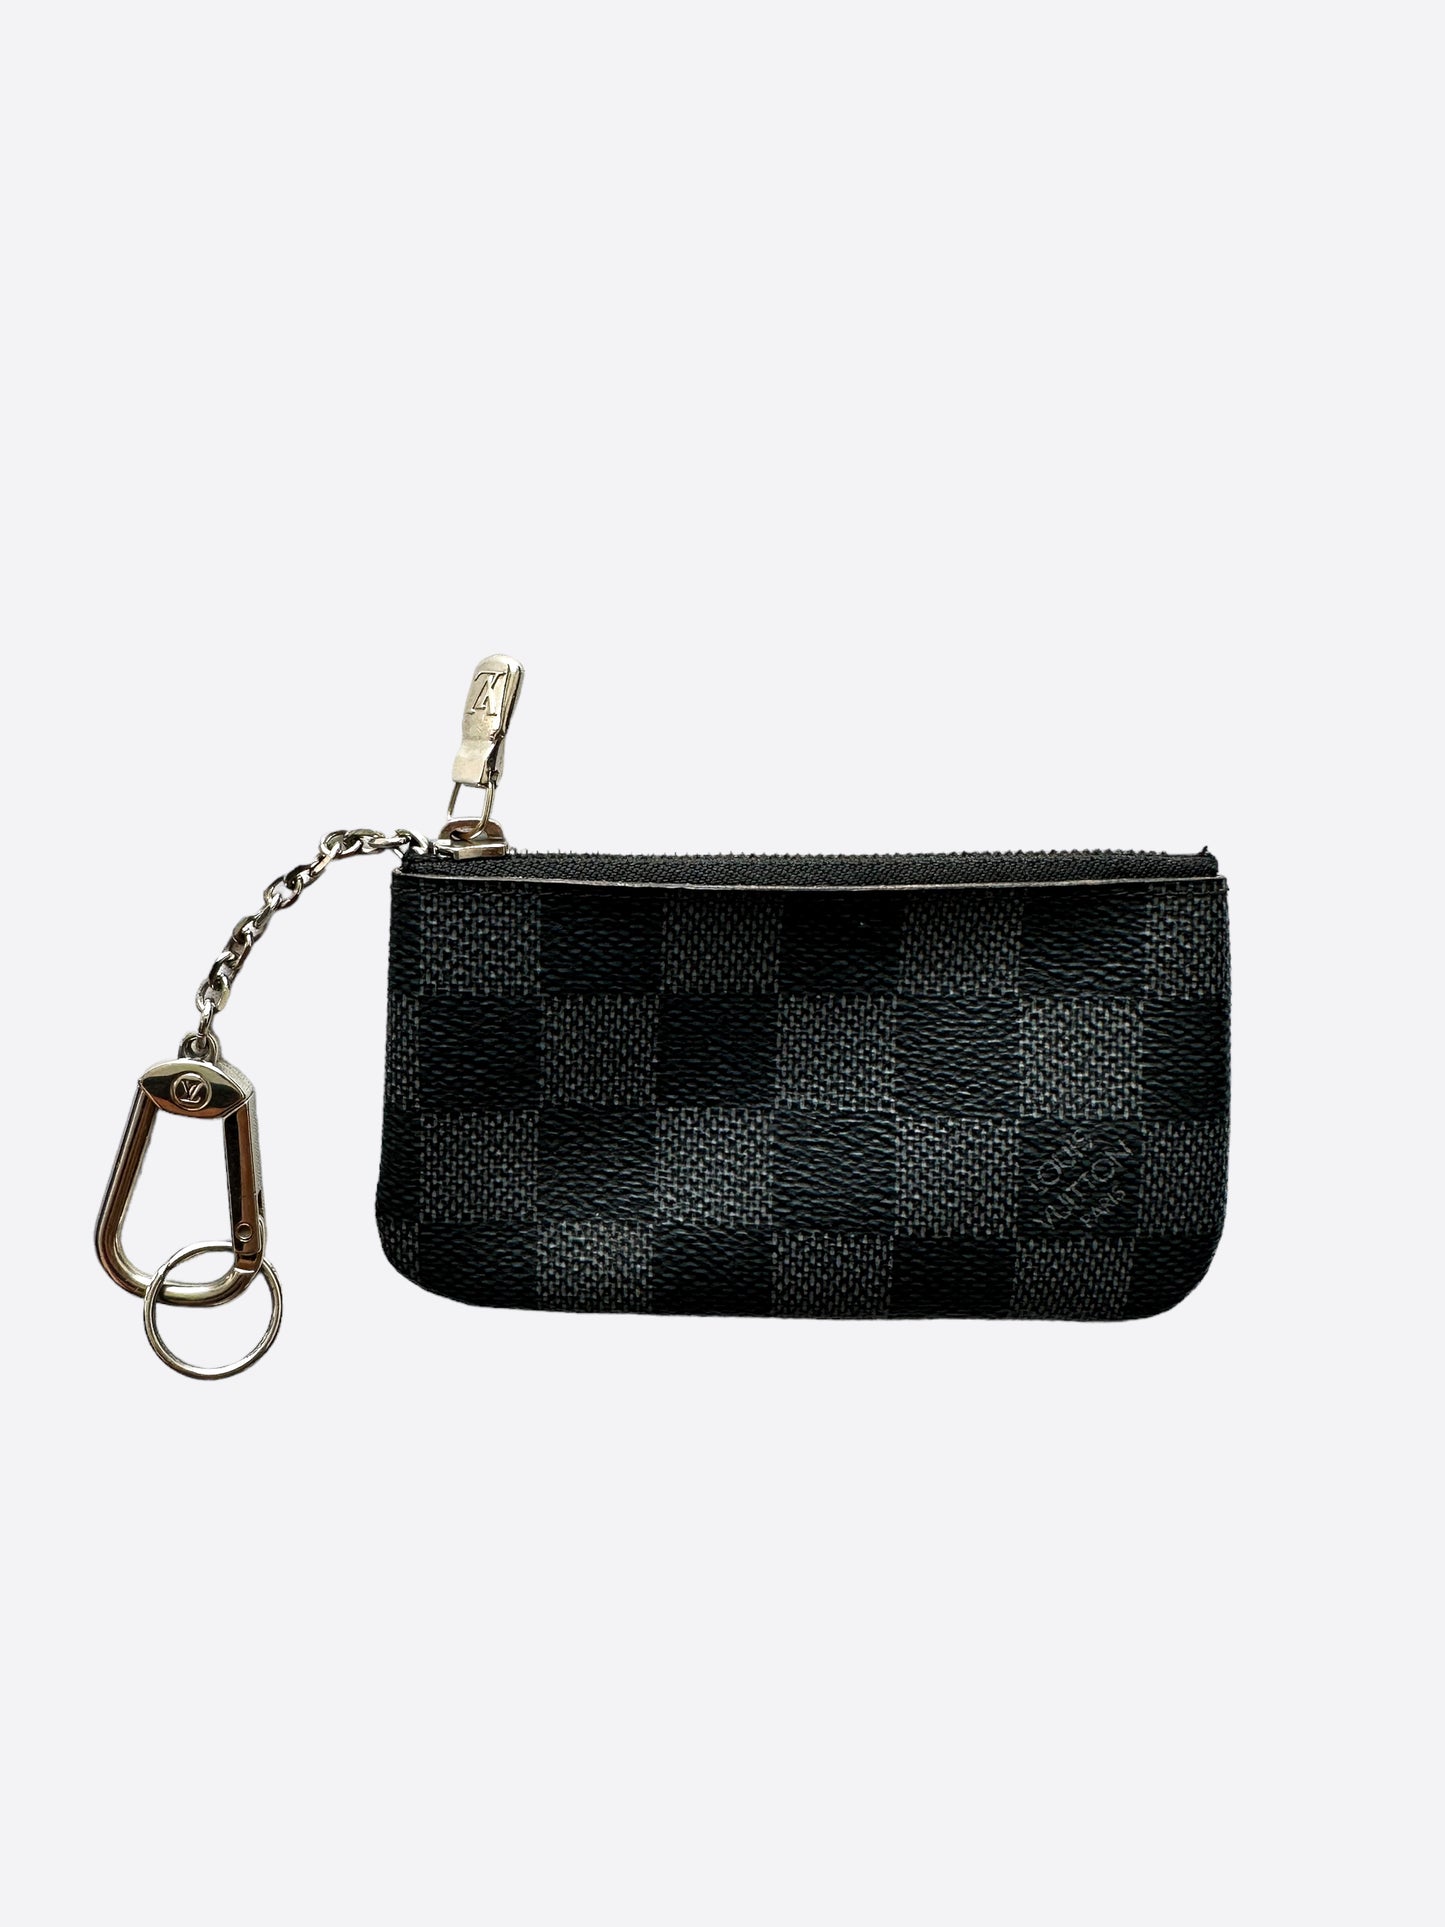 Louis Vuitton, Bags, Louis Vuitton Key Pouch In Damier Graphite